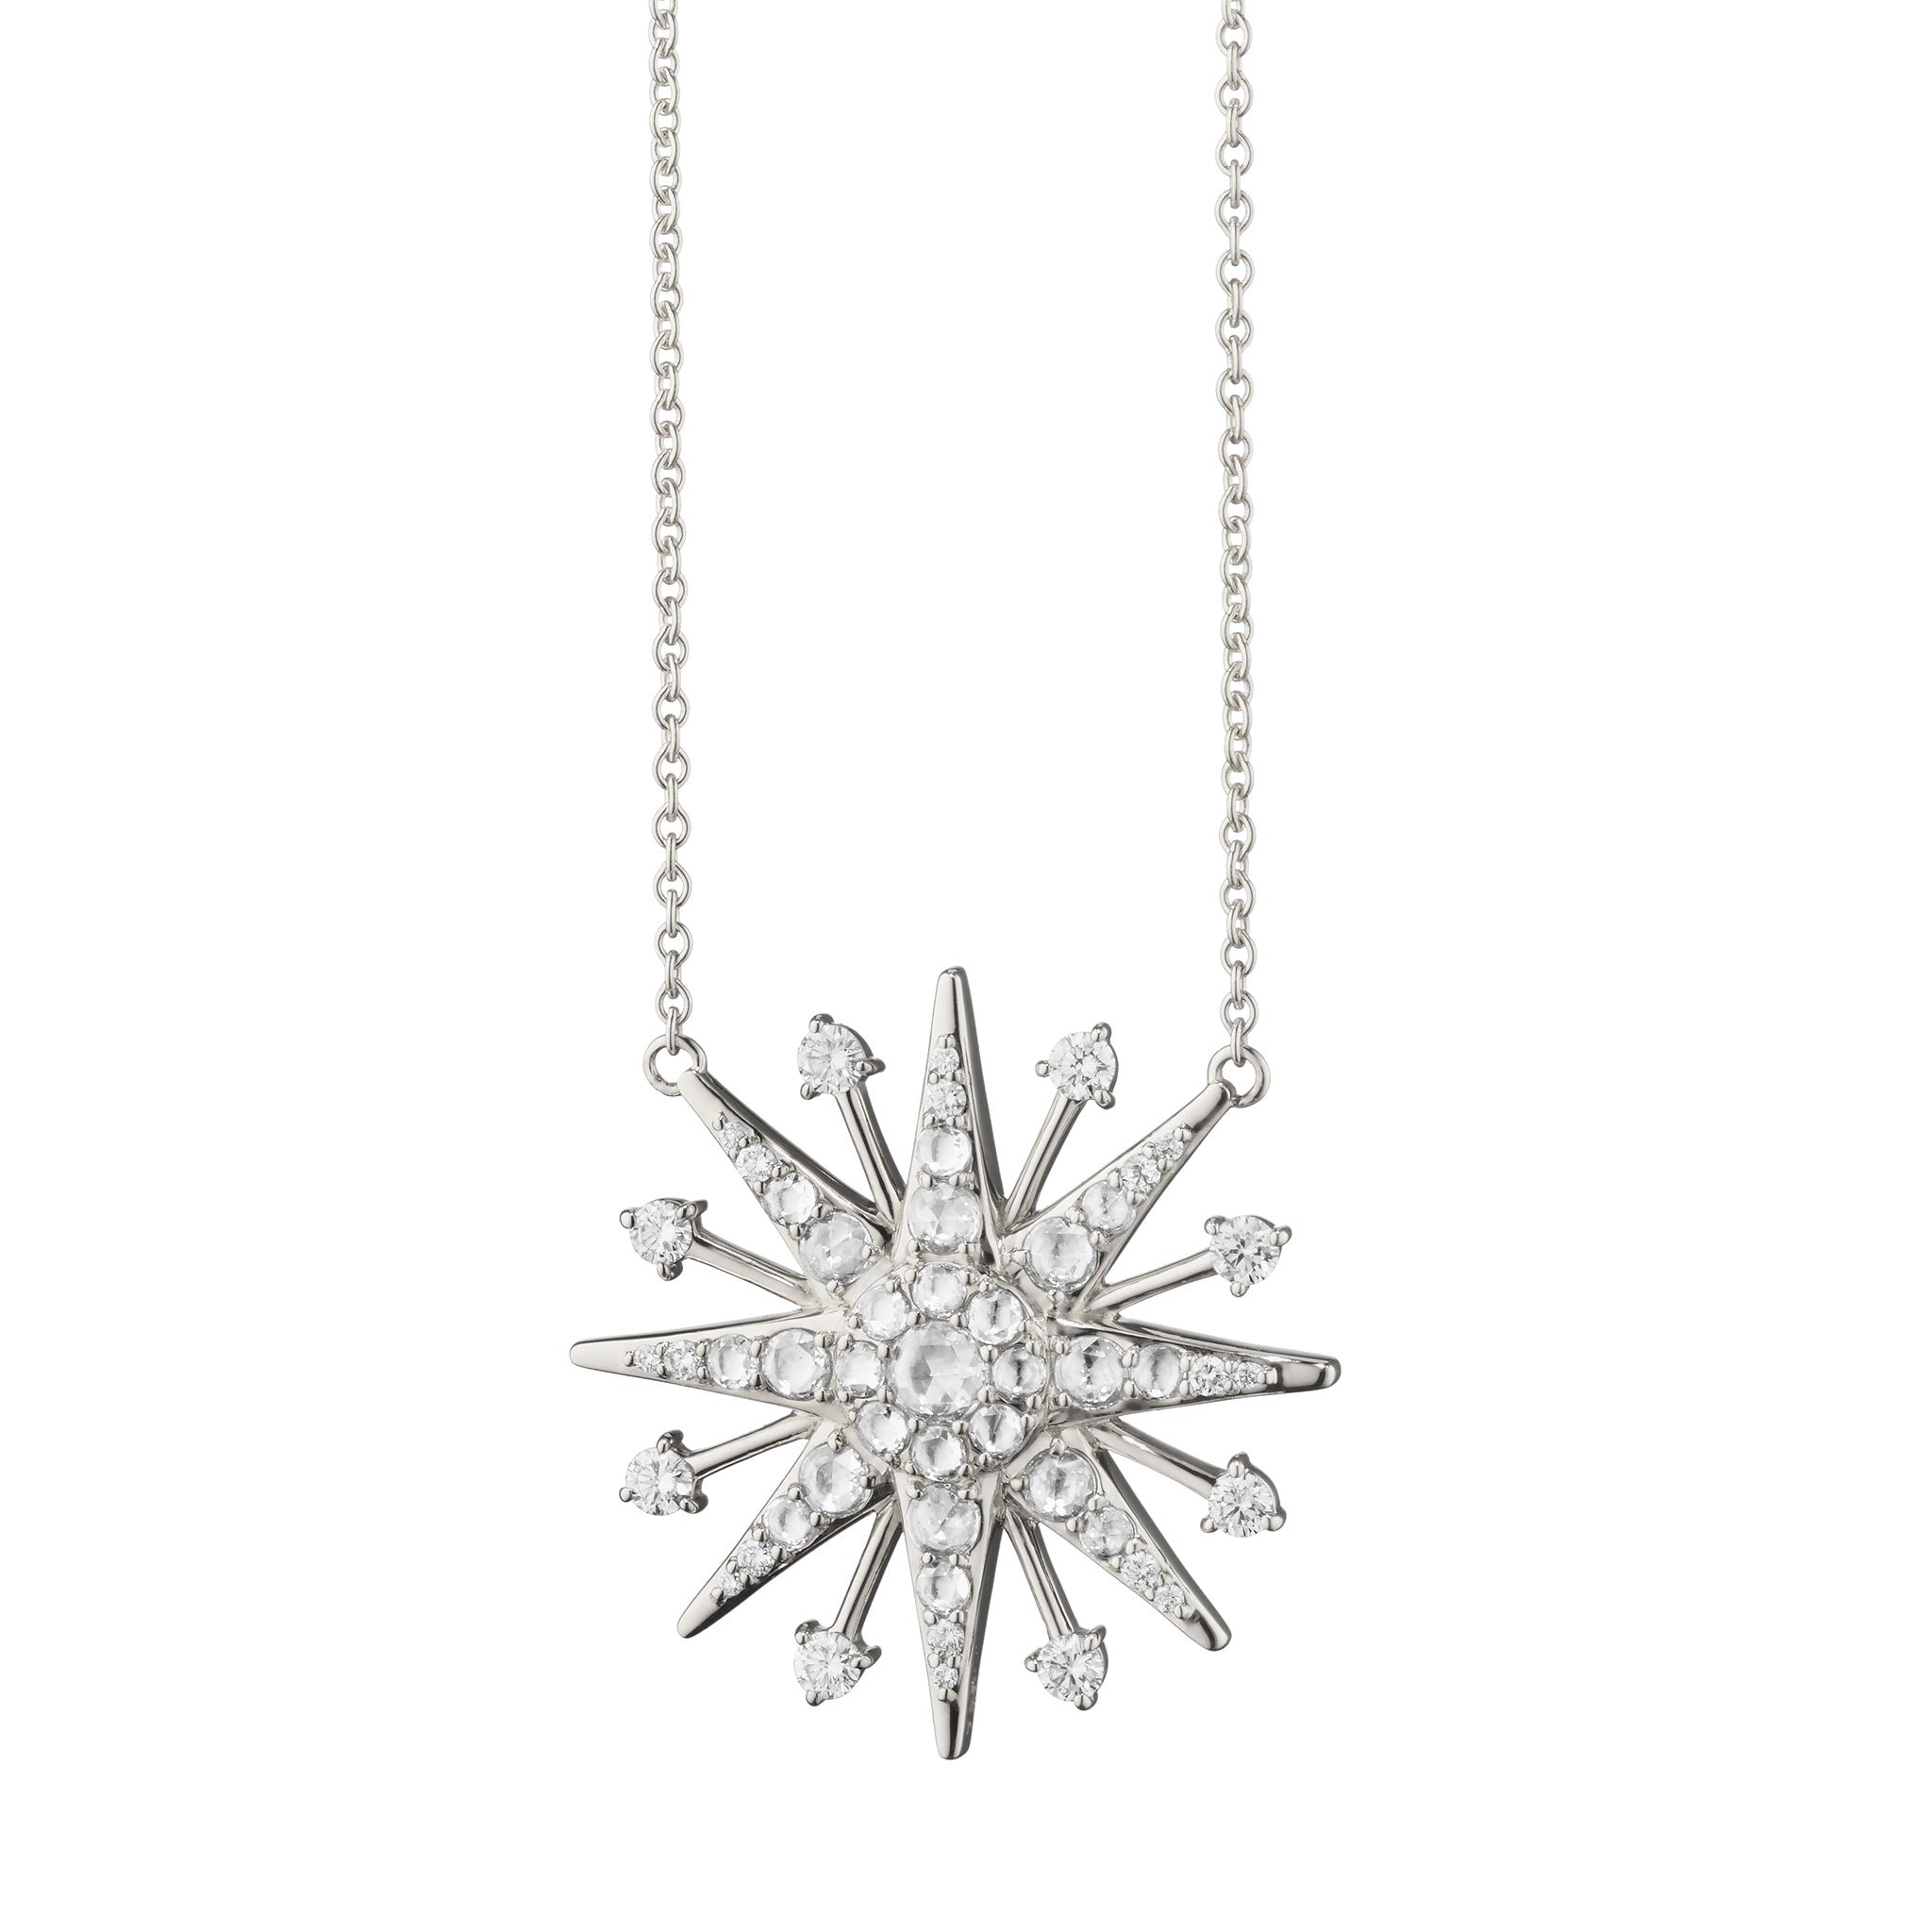 Ceramic Charm Necklace Snowflake